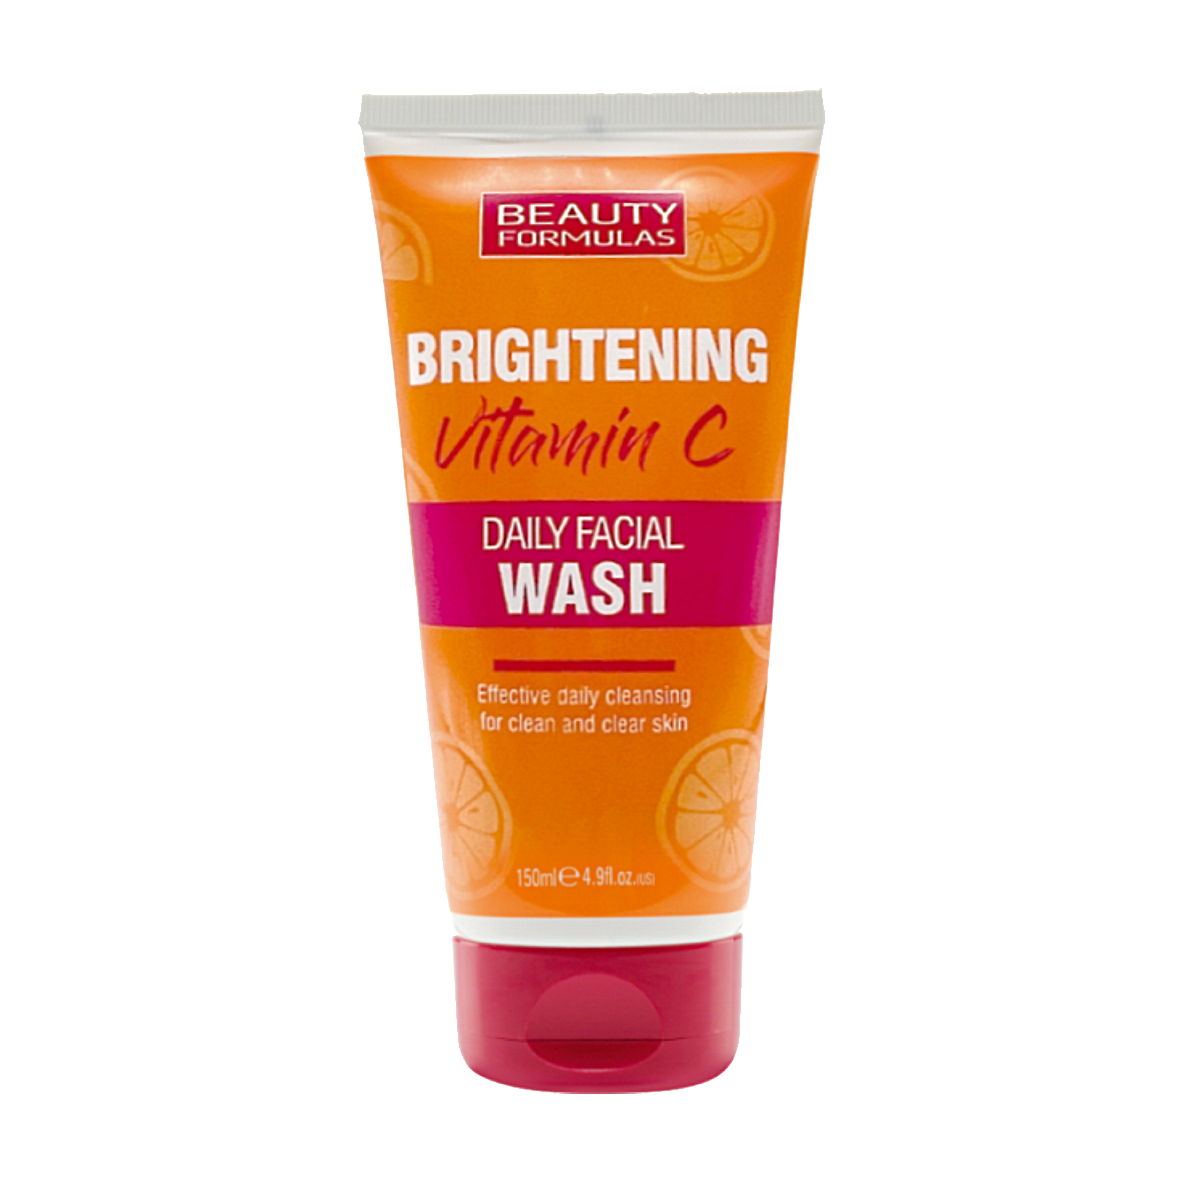 Vitamin C brightening daily facial wash 150ml.